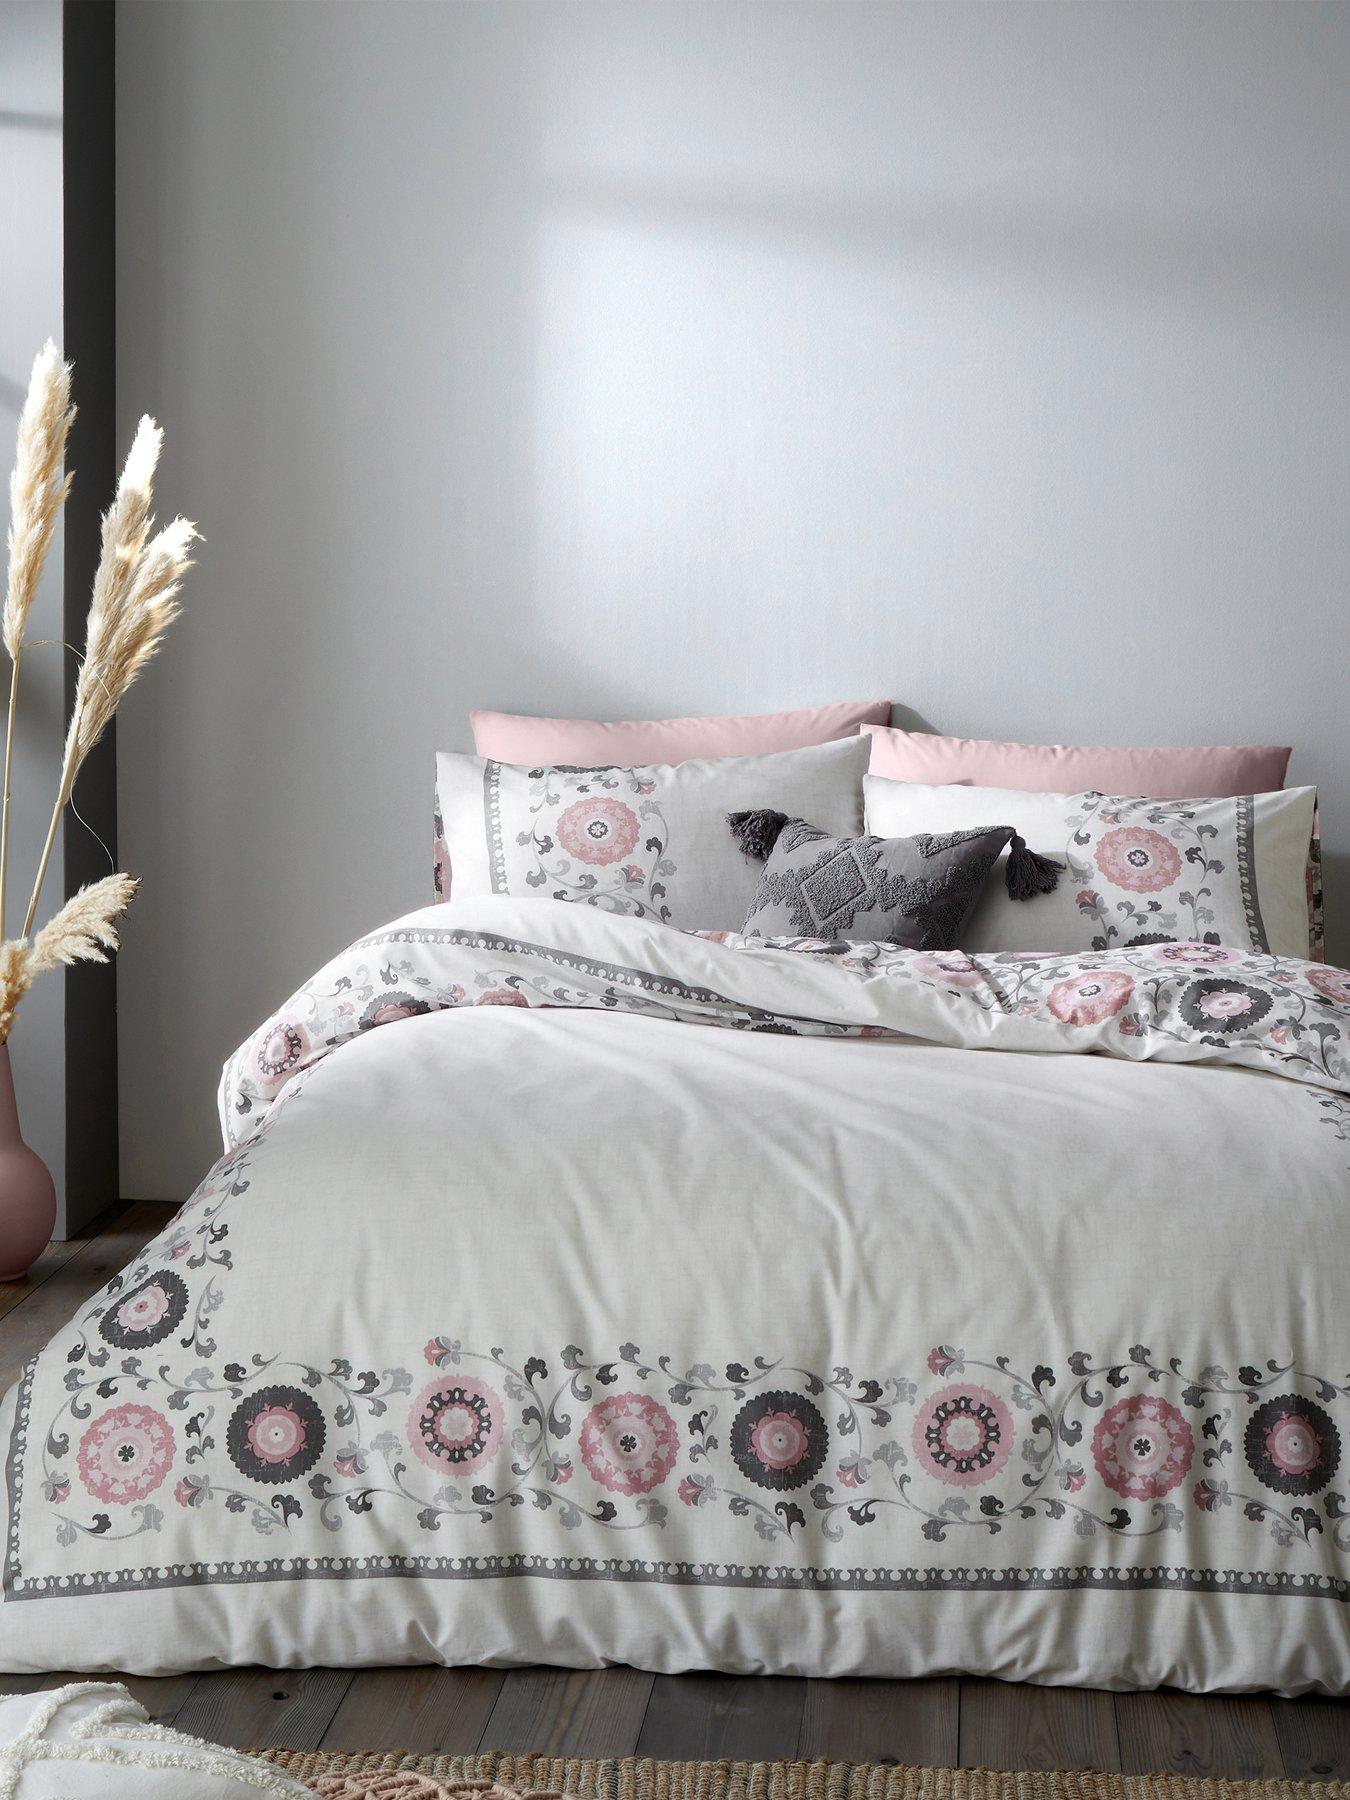 Cascade Home Julia Floral Throw Pink Flowers Bedspread 150cm L x 220cm W 